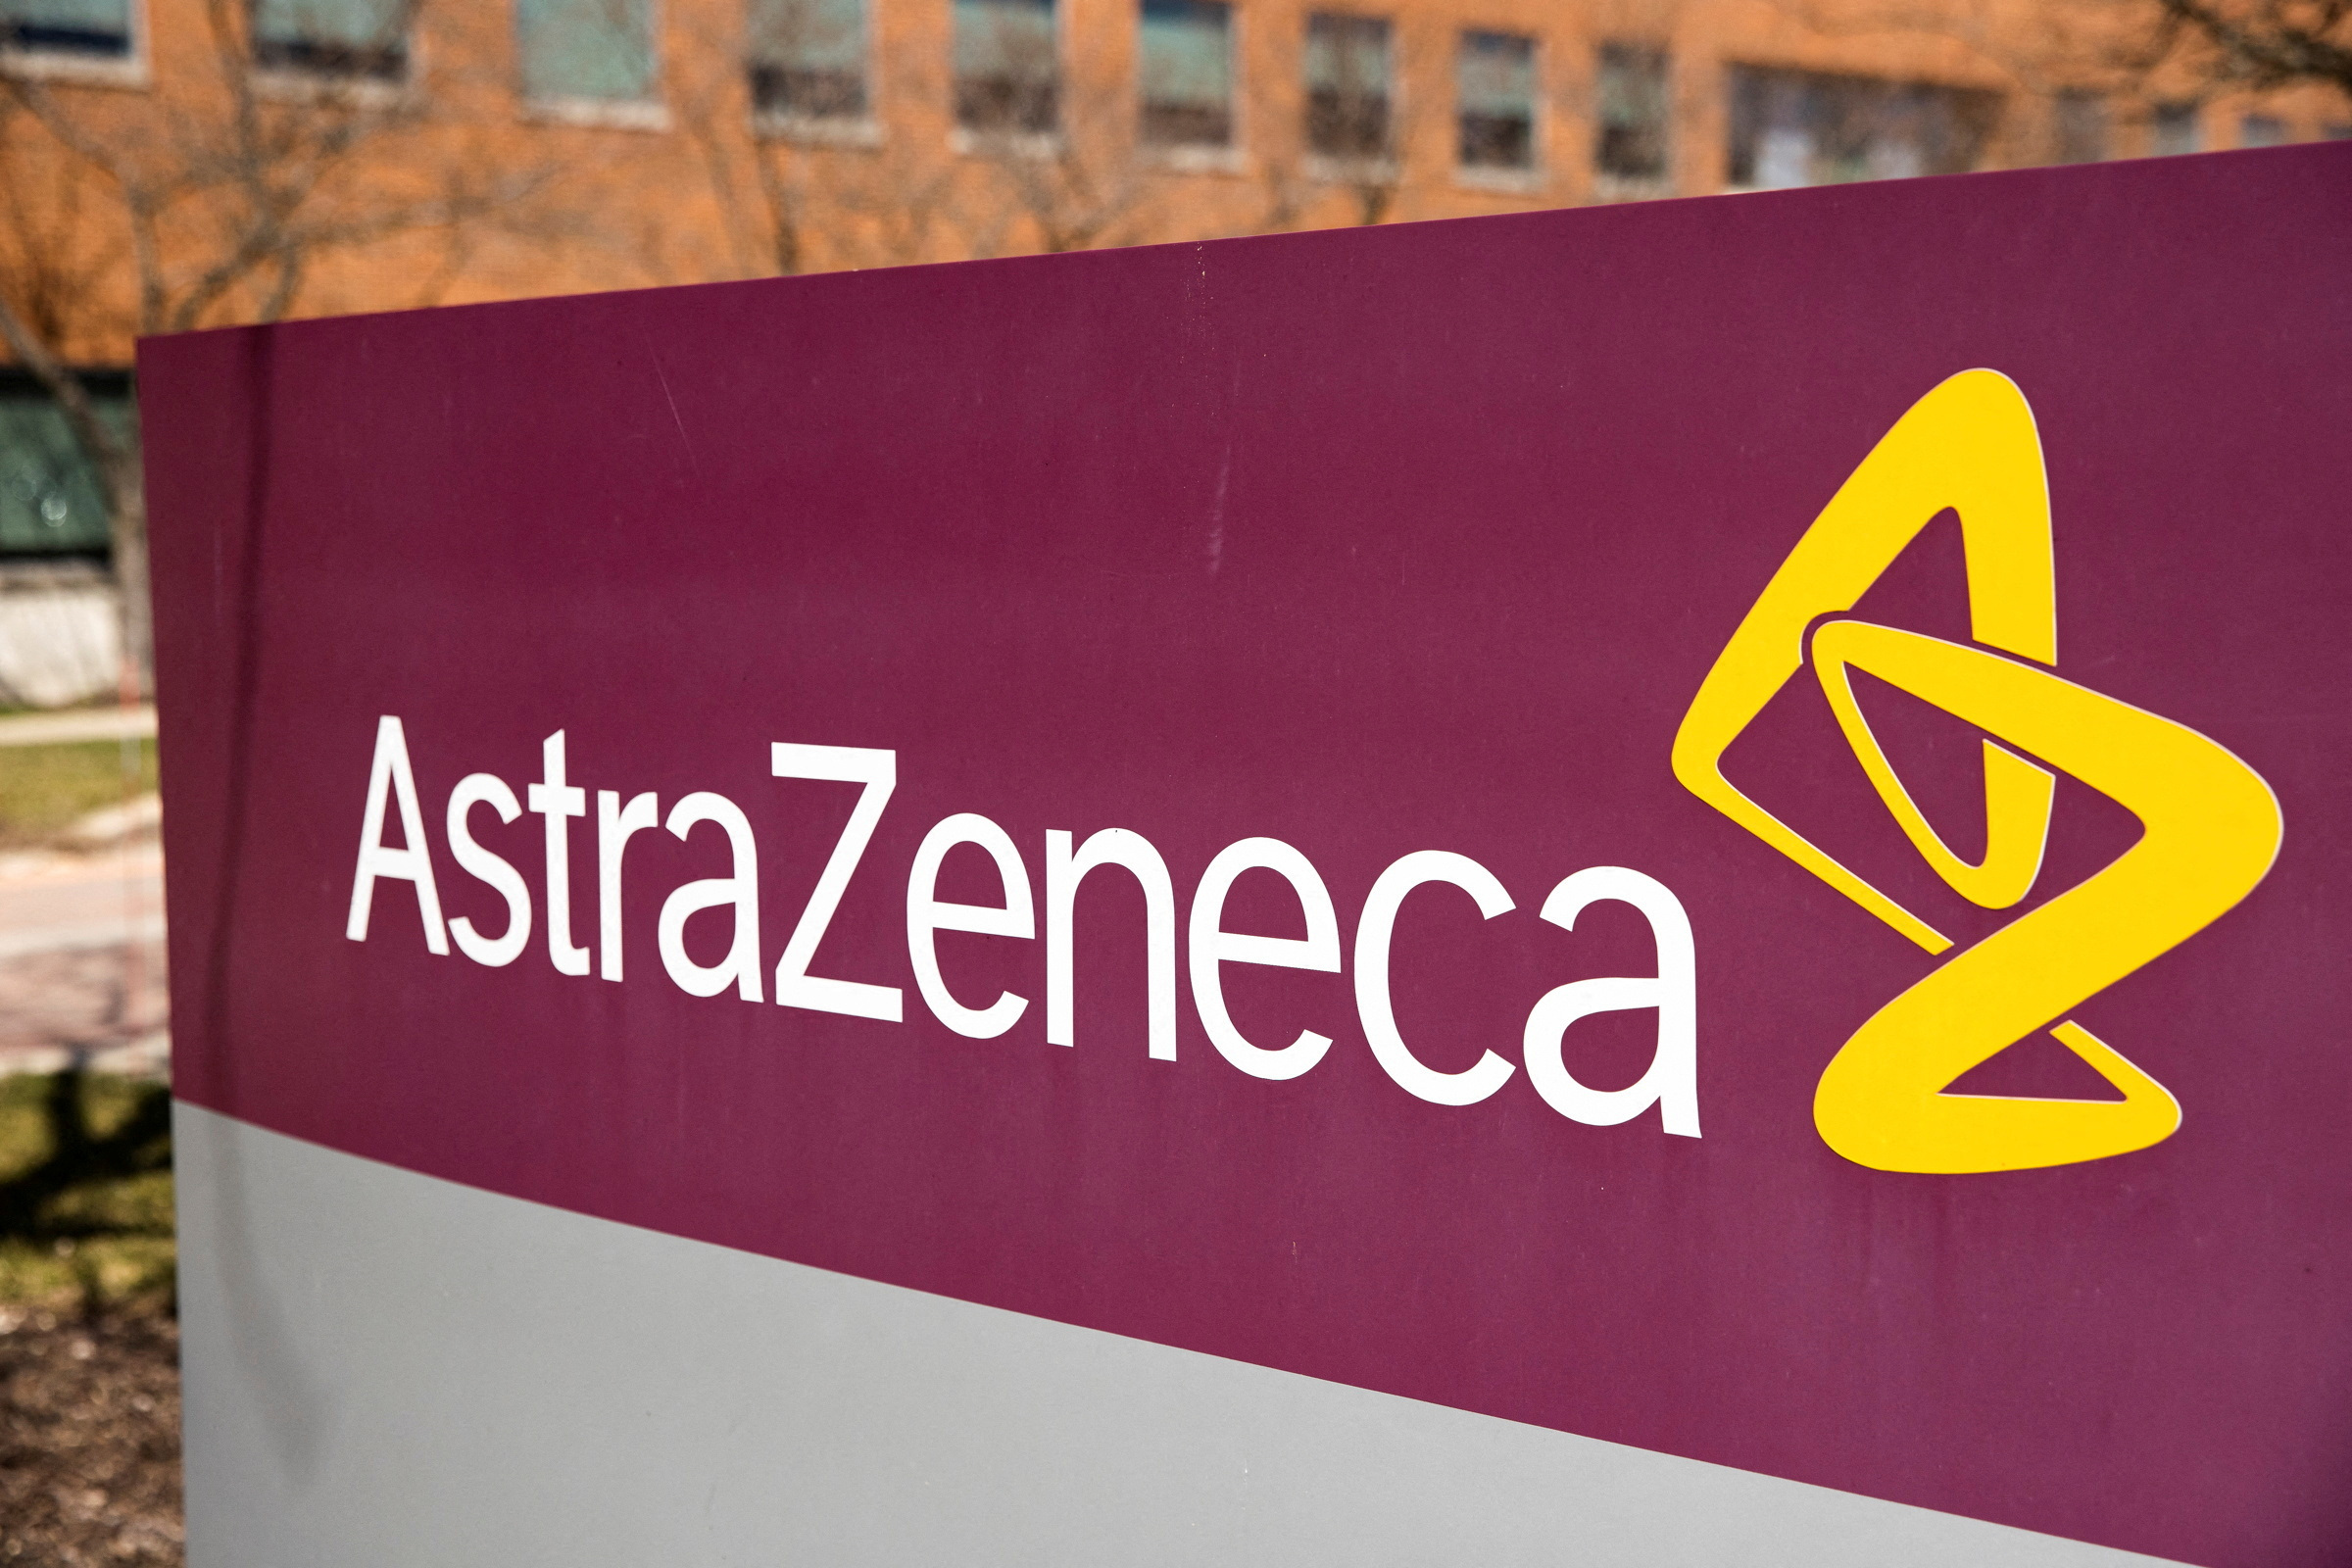 Exterior photos of the North America headquarters of AstraZeneca